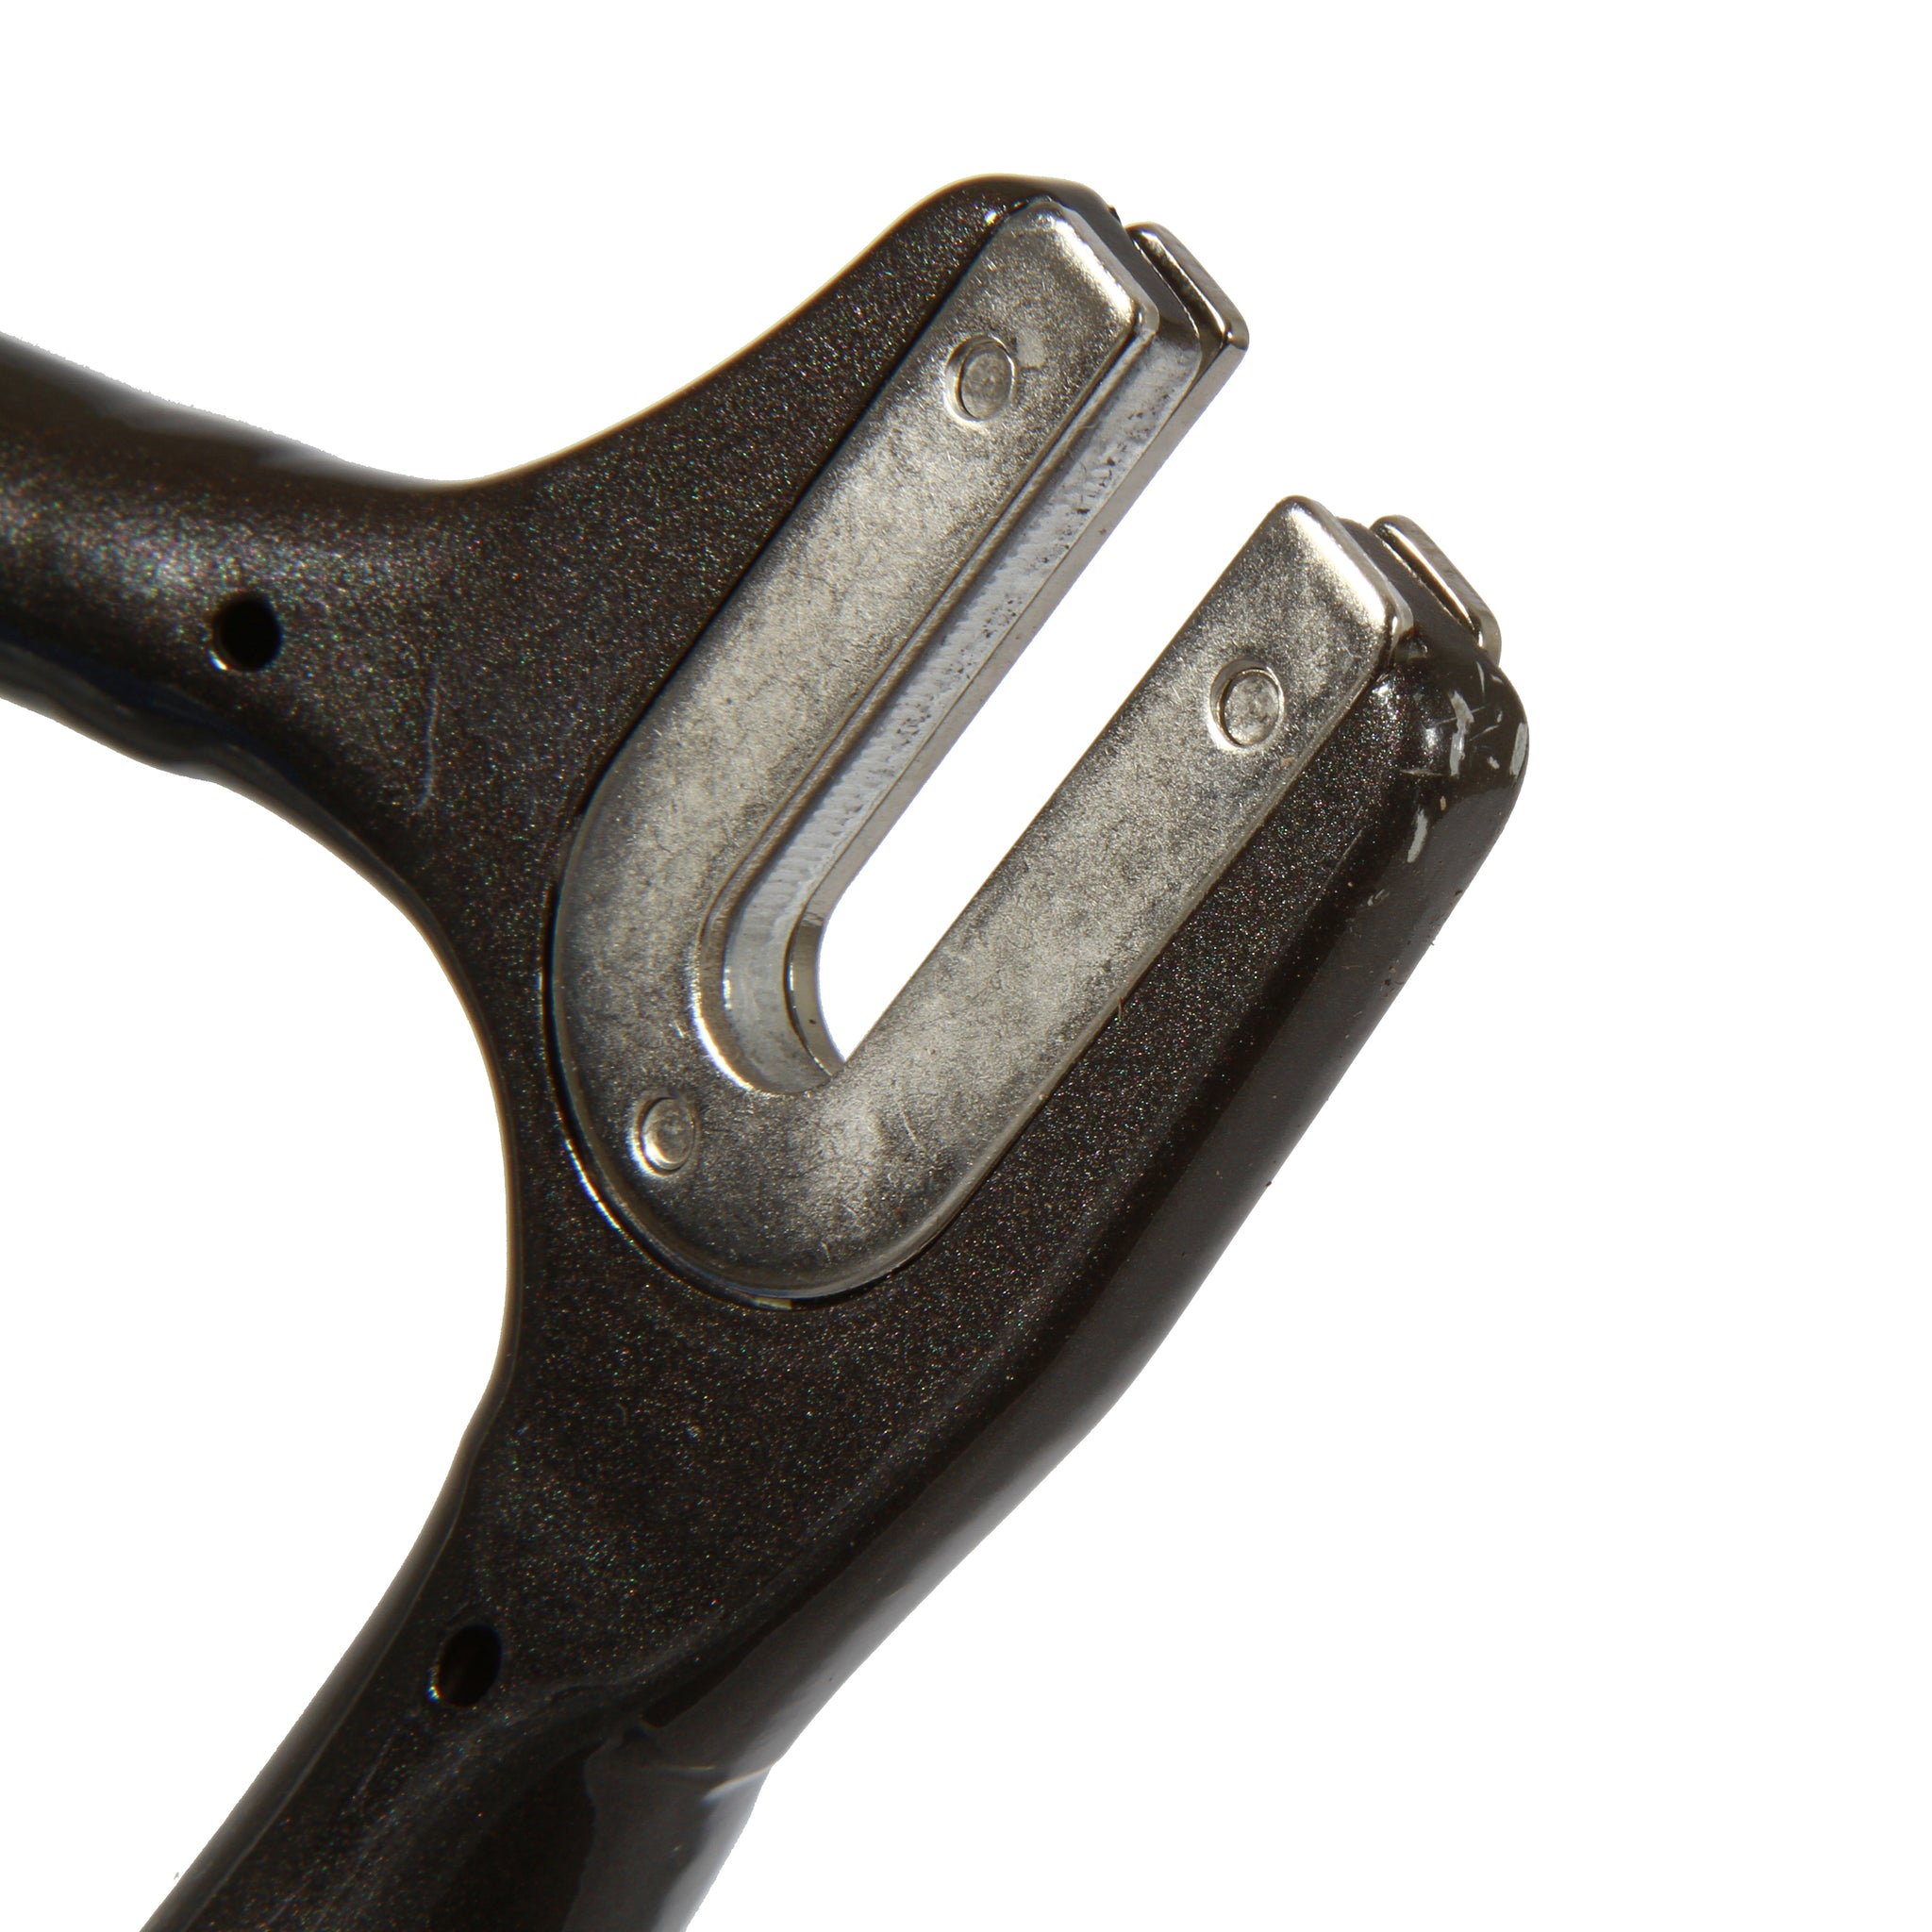 XL Skream Magnum22 frameset - Blemished - Retrogression Fixed Gear